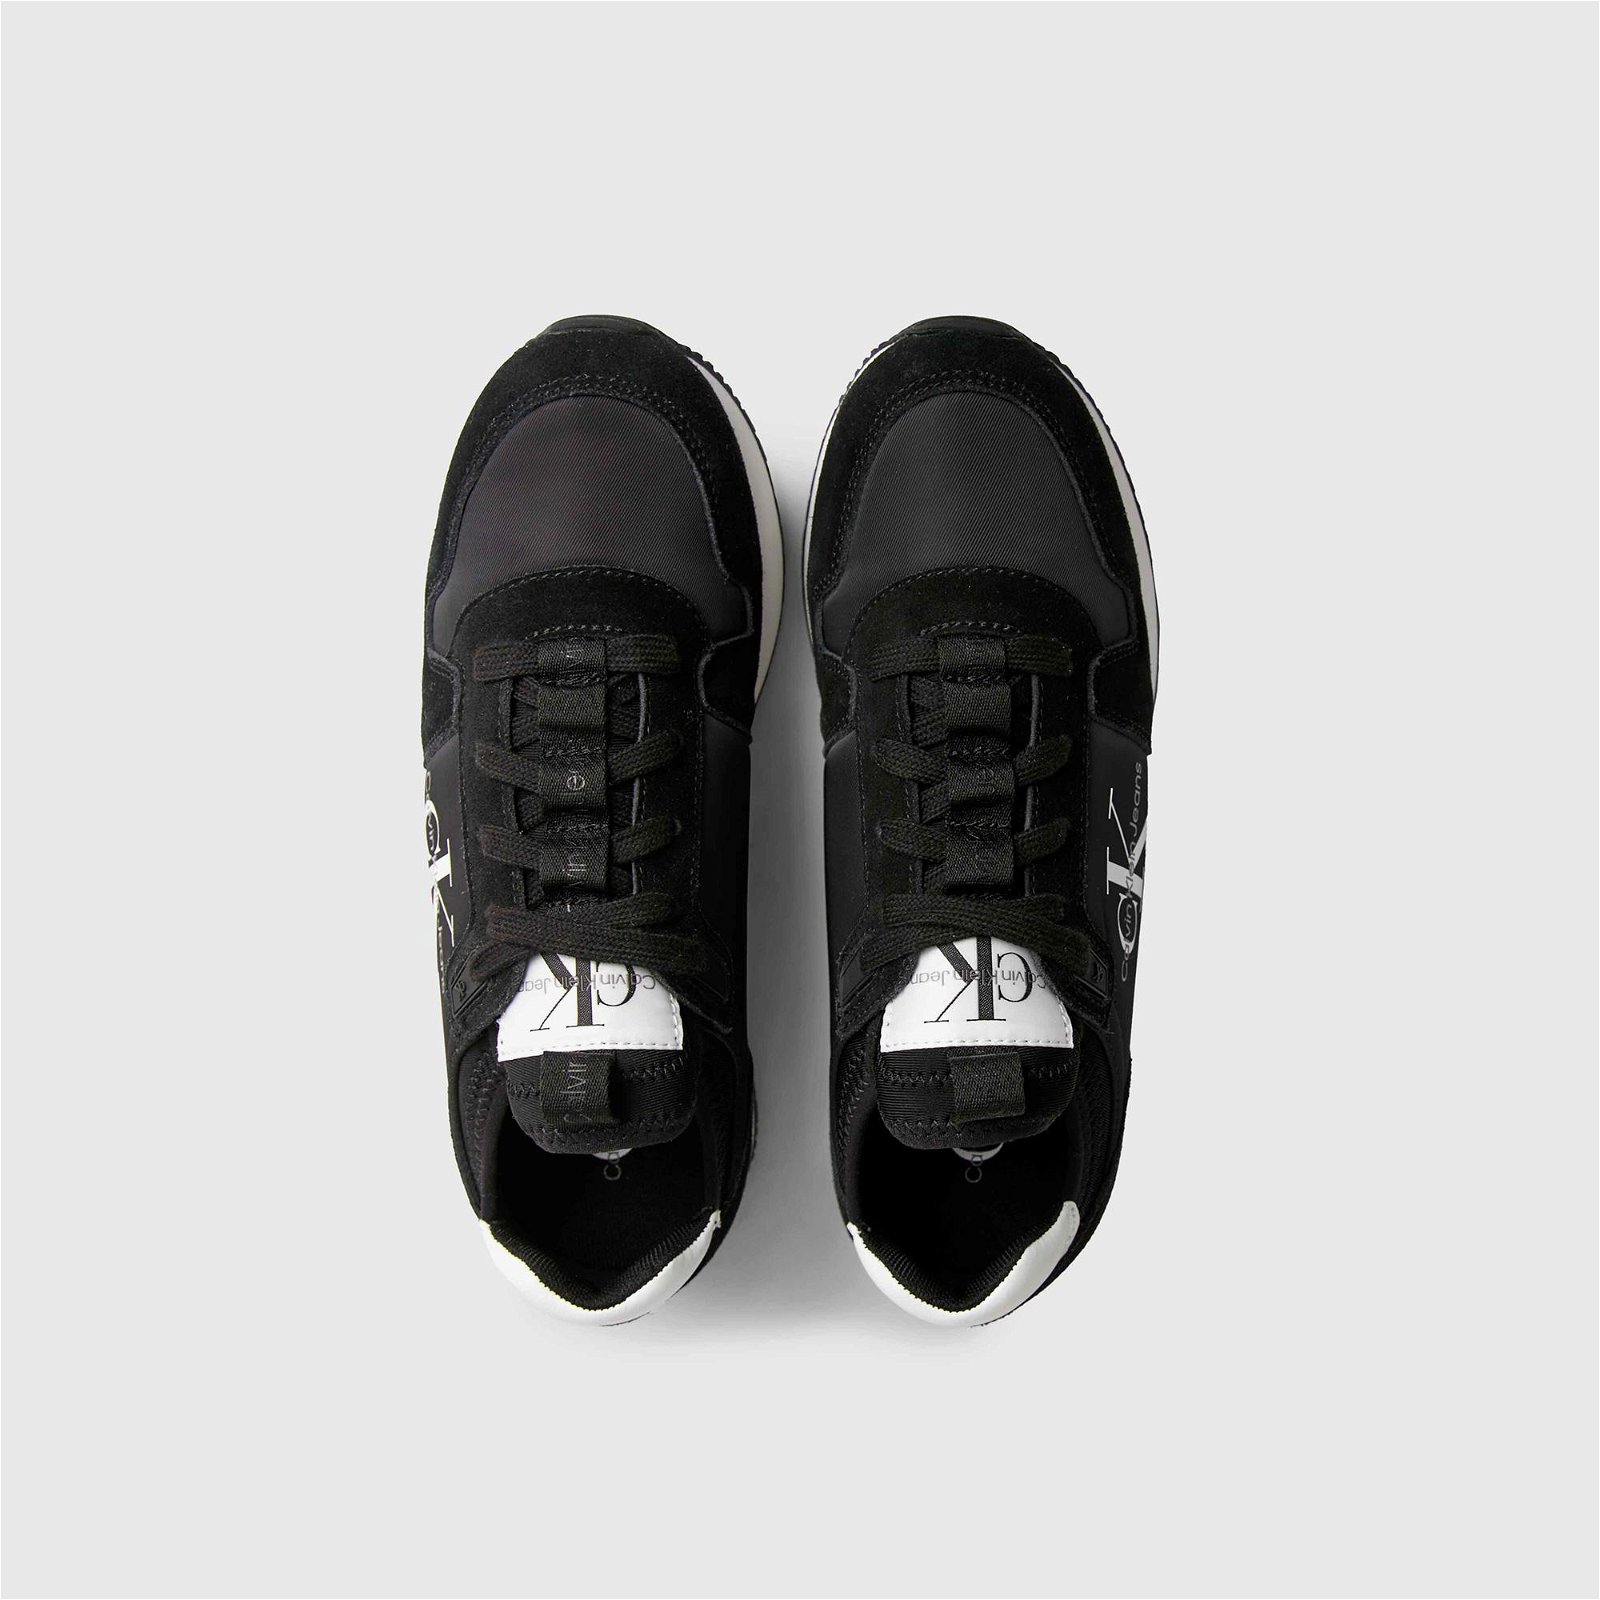 Calvin Klein Jeans Phuket Kadın Siyah Sneaker